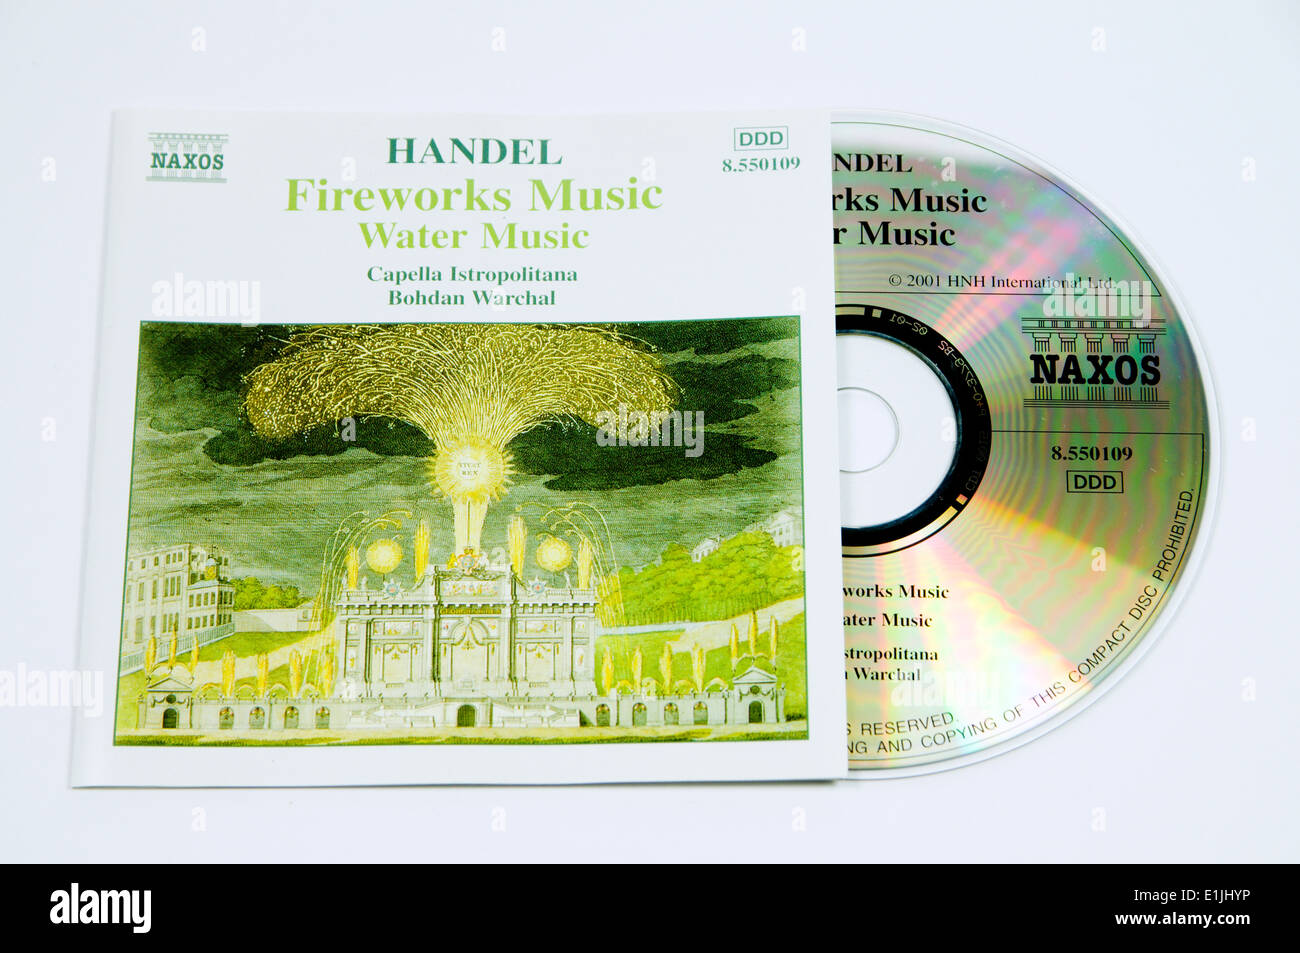 Handel Classical Music CD Stock Photo